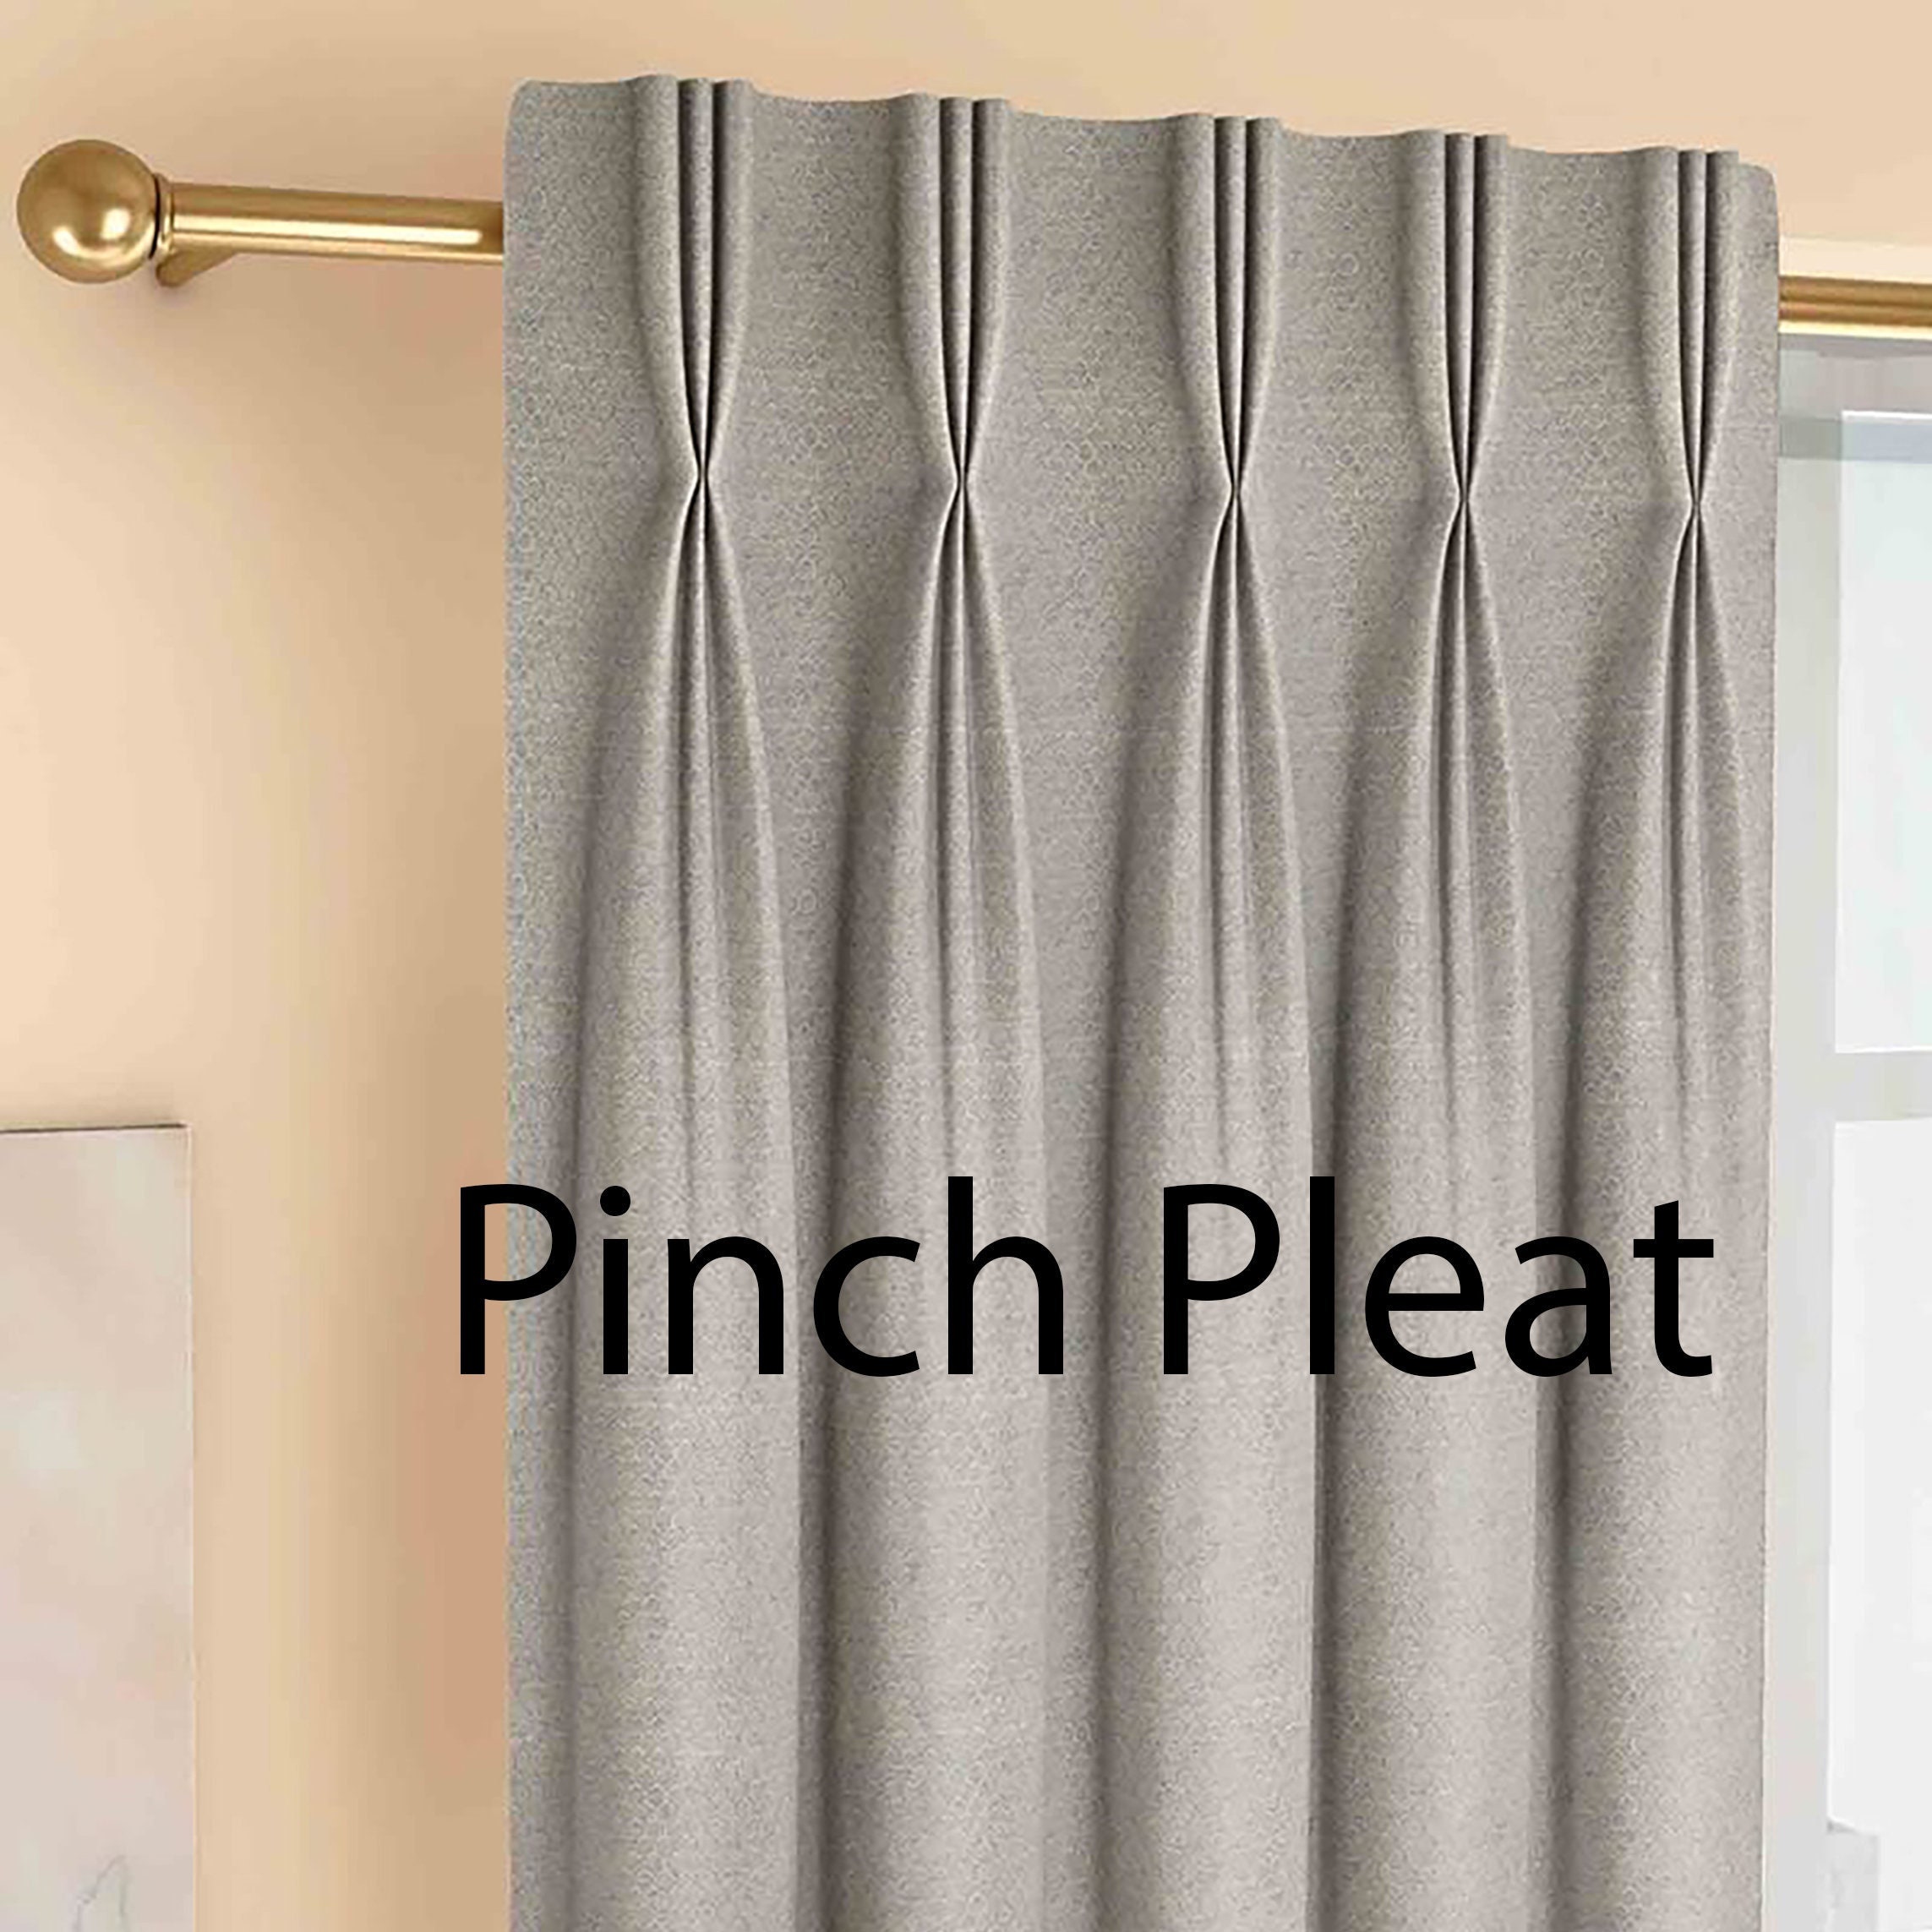 Pinch Pleat Buckram - 5m or 100m Roll - Curtain Buckram